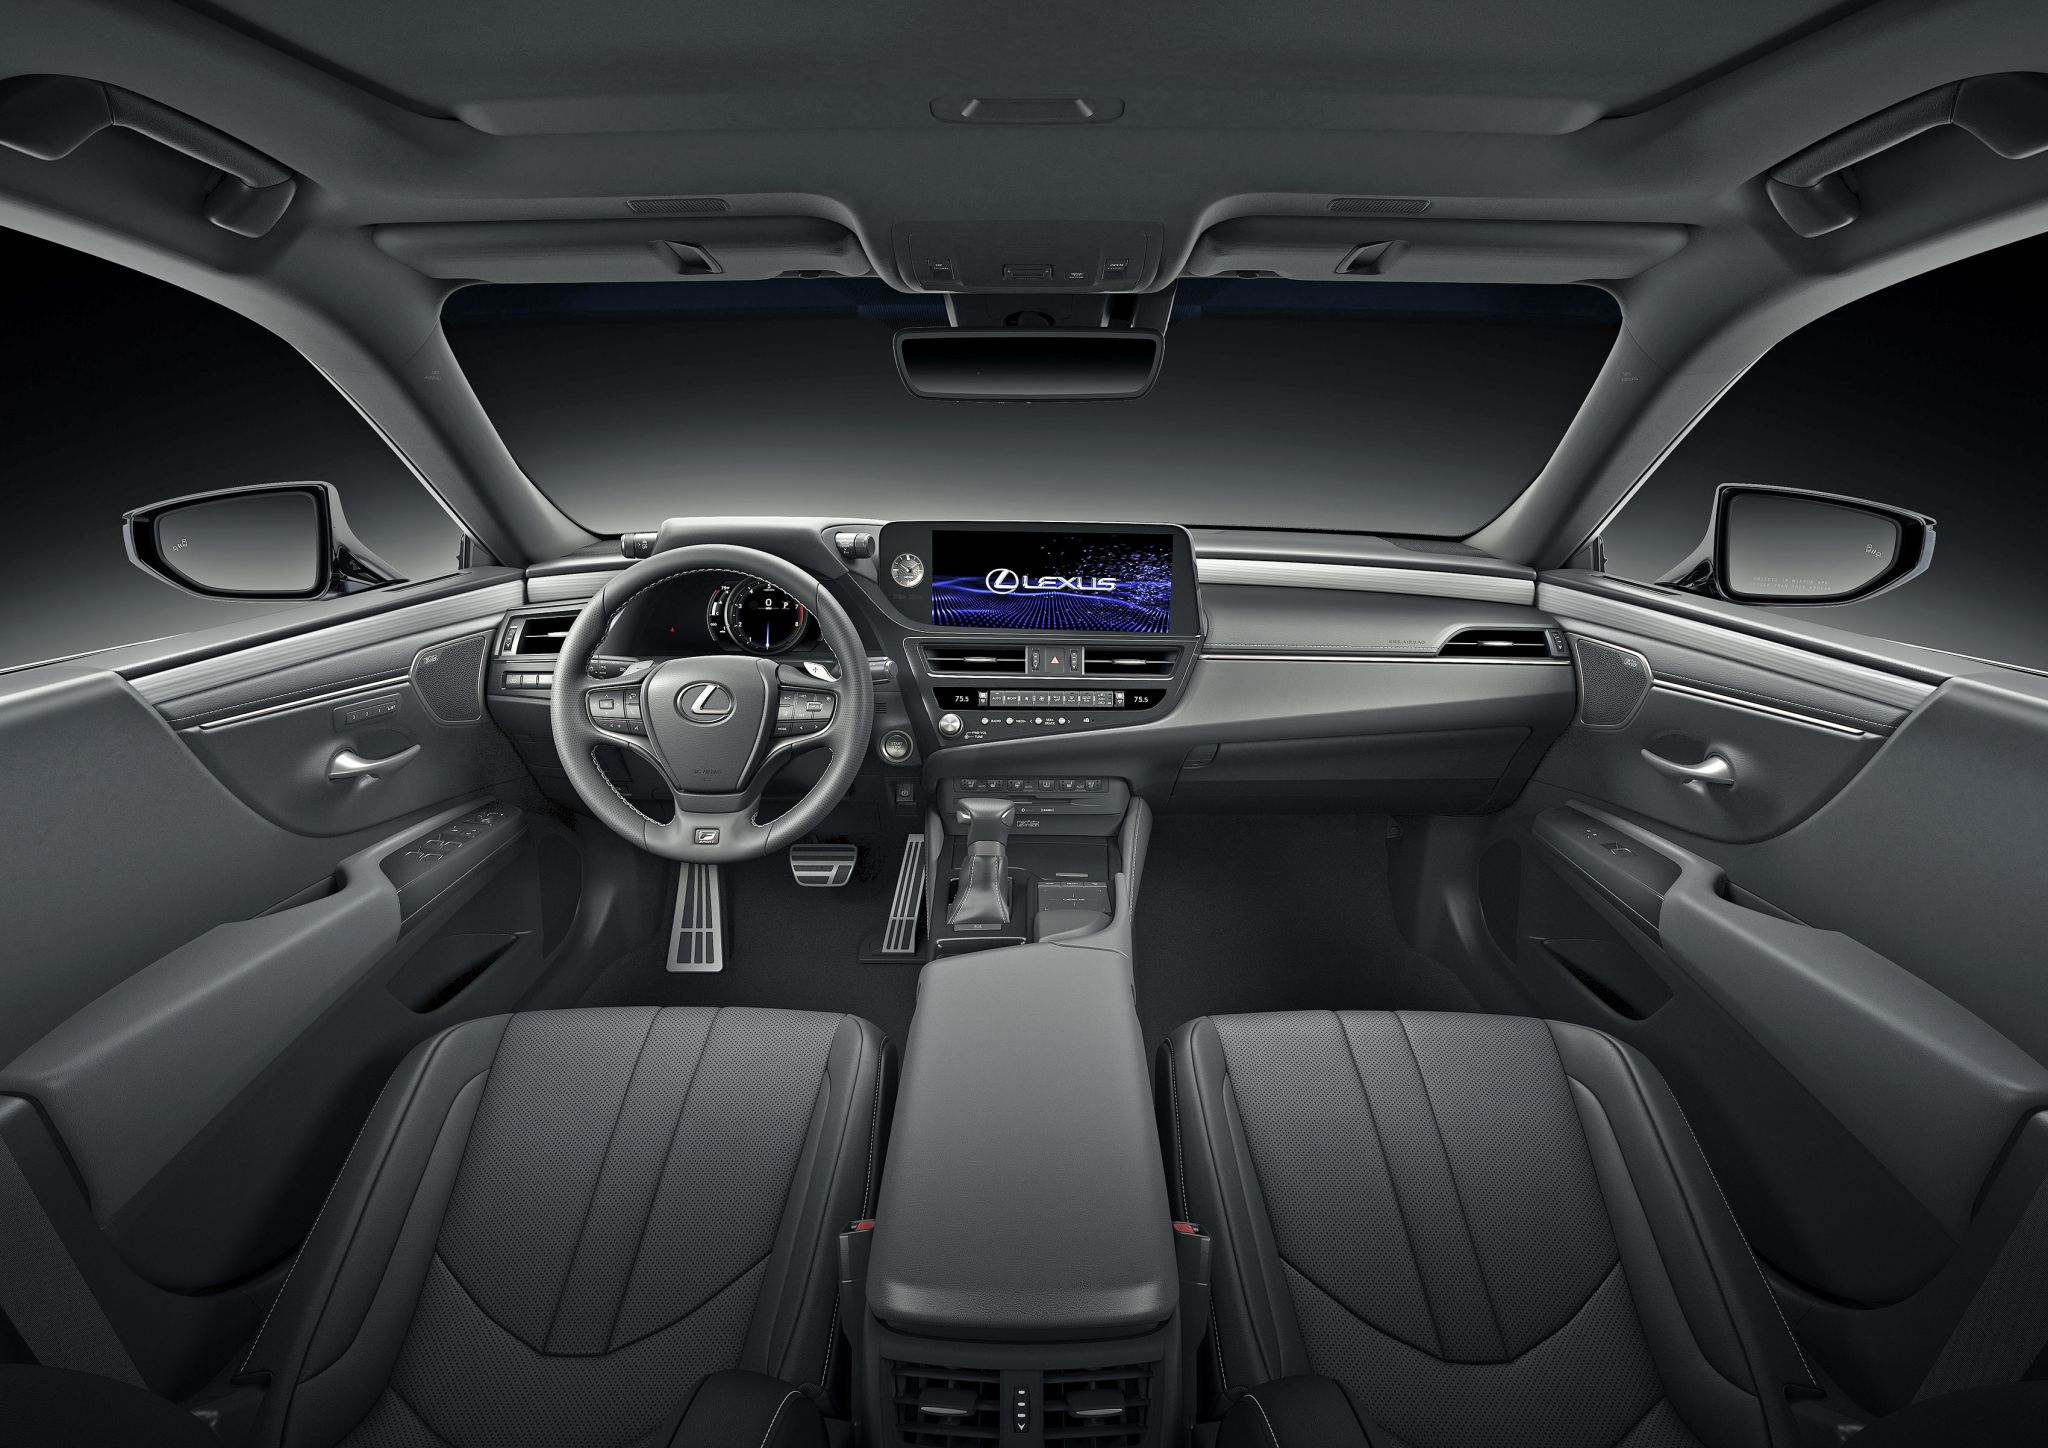 Lexus ES 300h hybrid combines luxury, fuel economy in a sedan